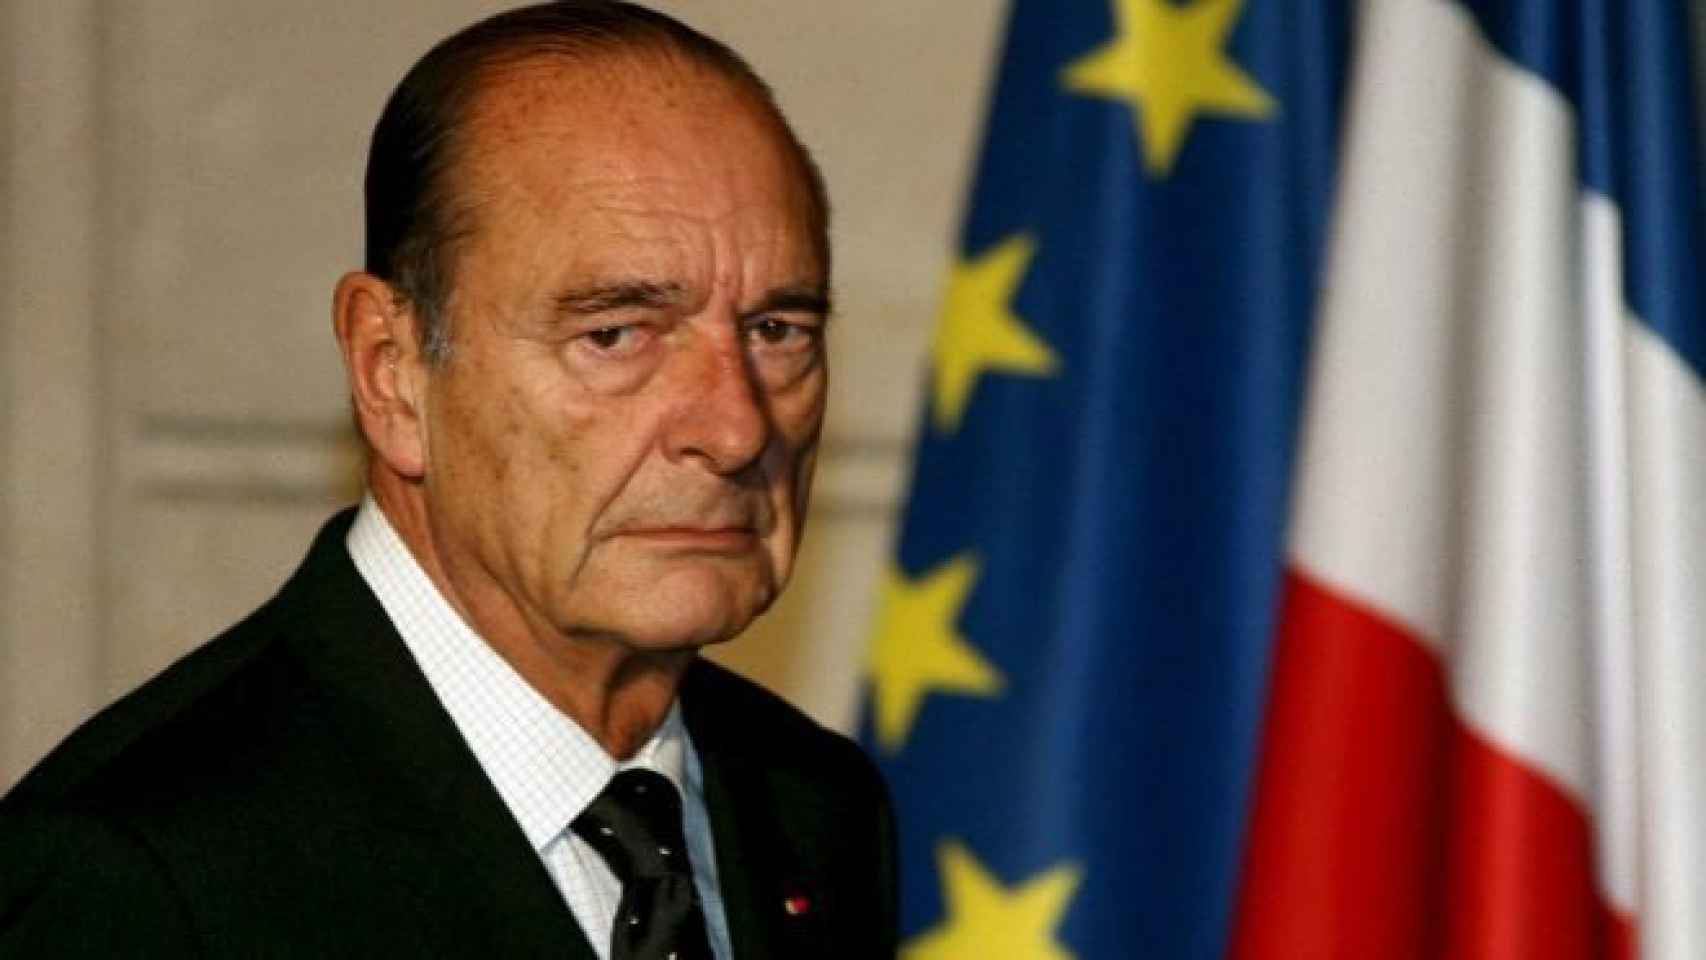 Jacques Chirac en una imagen de archivo